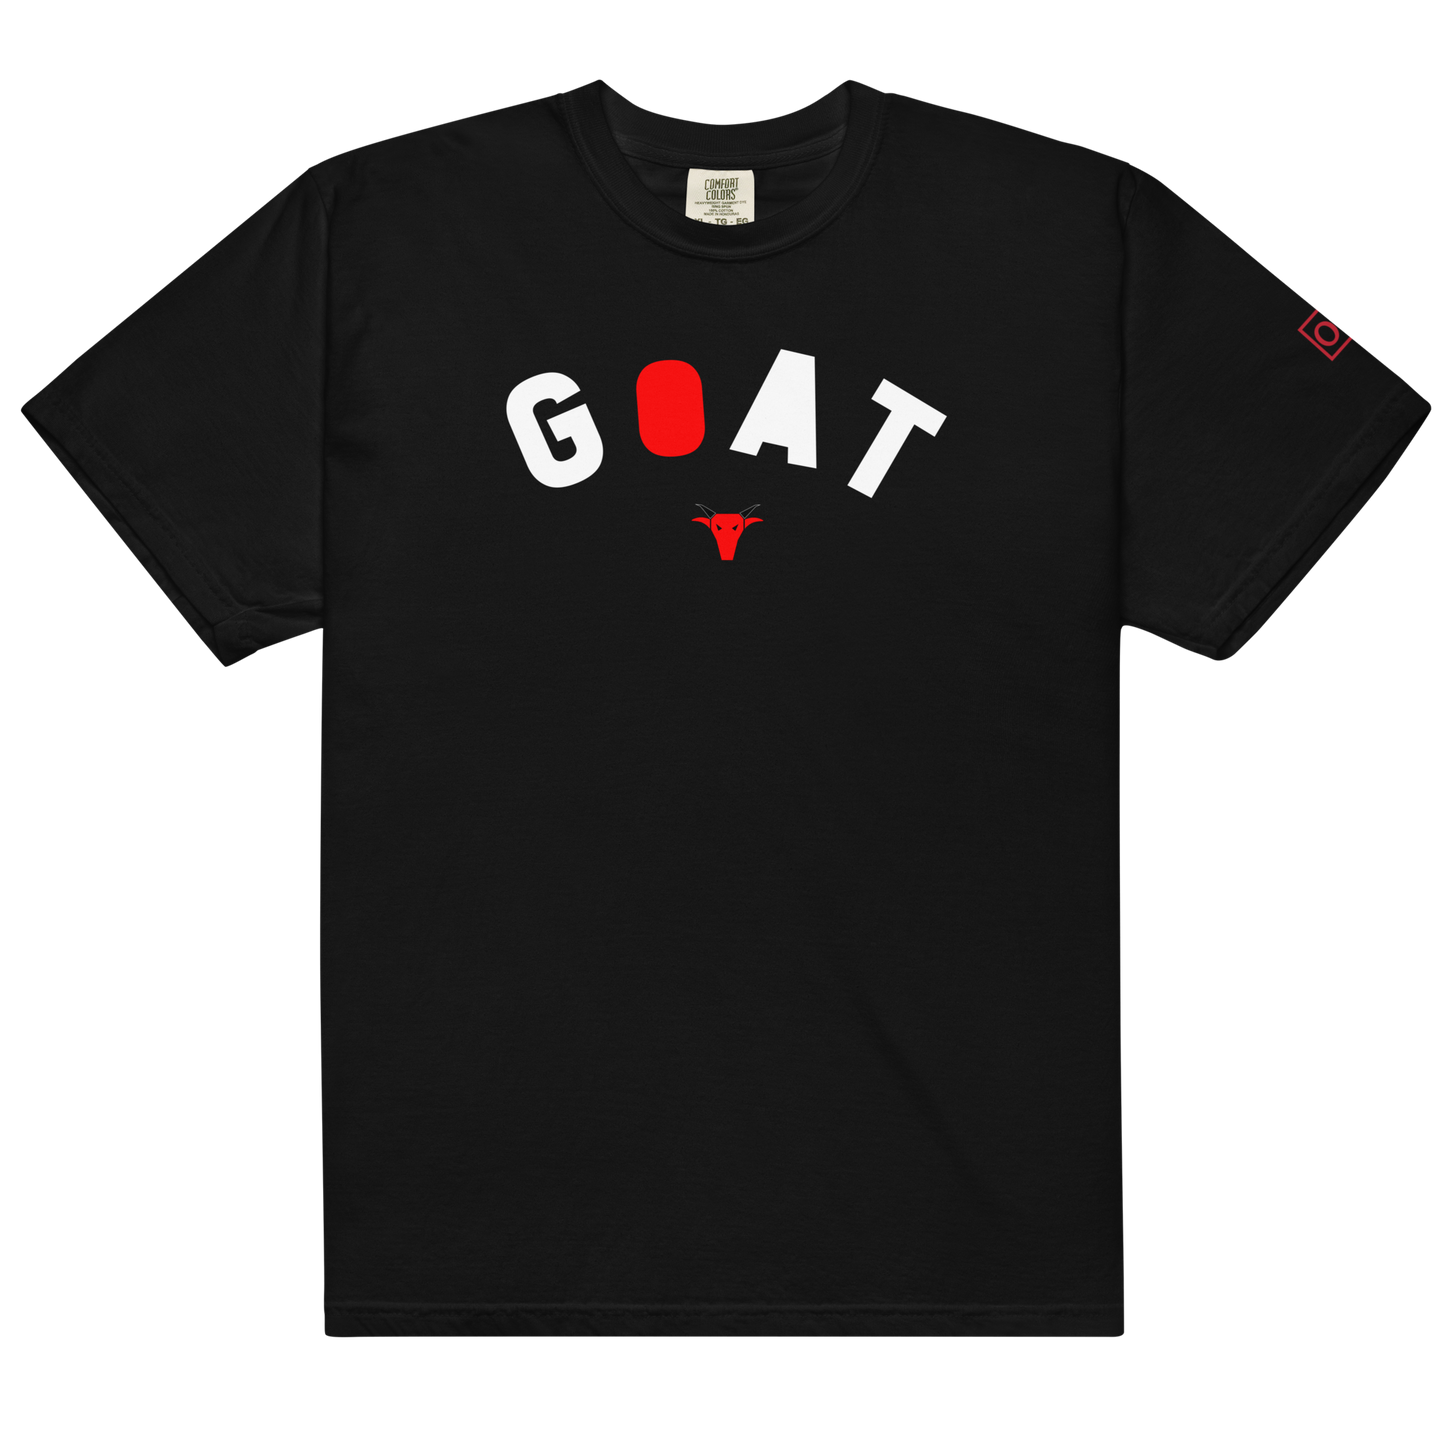 The "GOAT" Logo tee